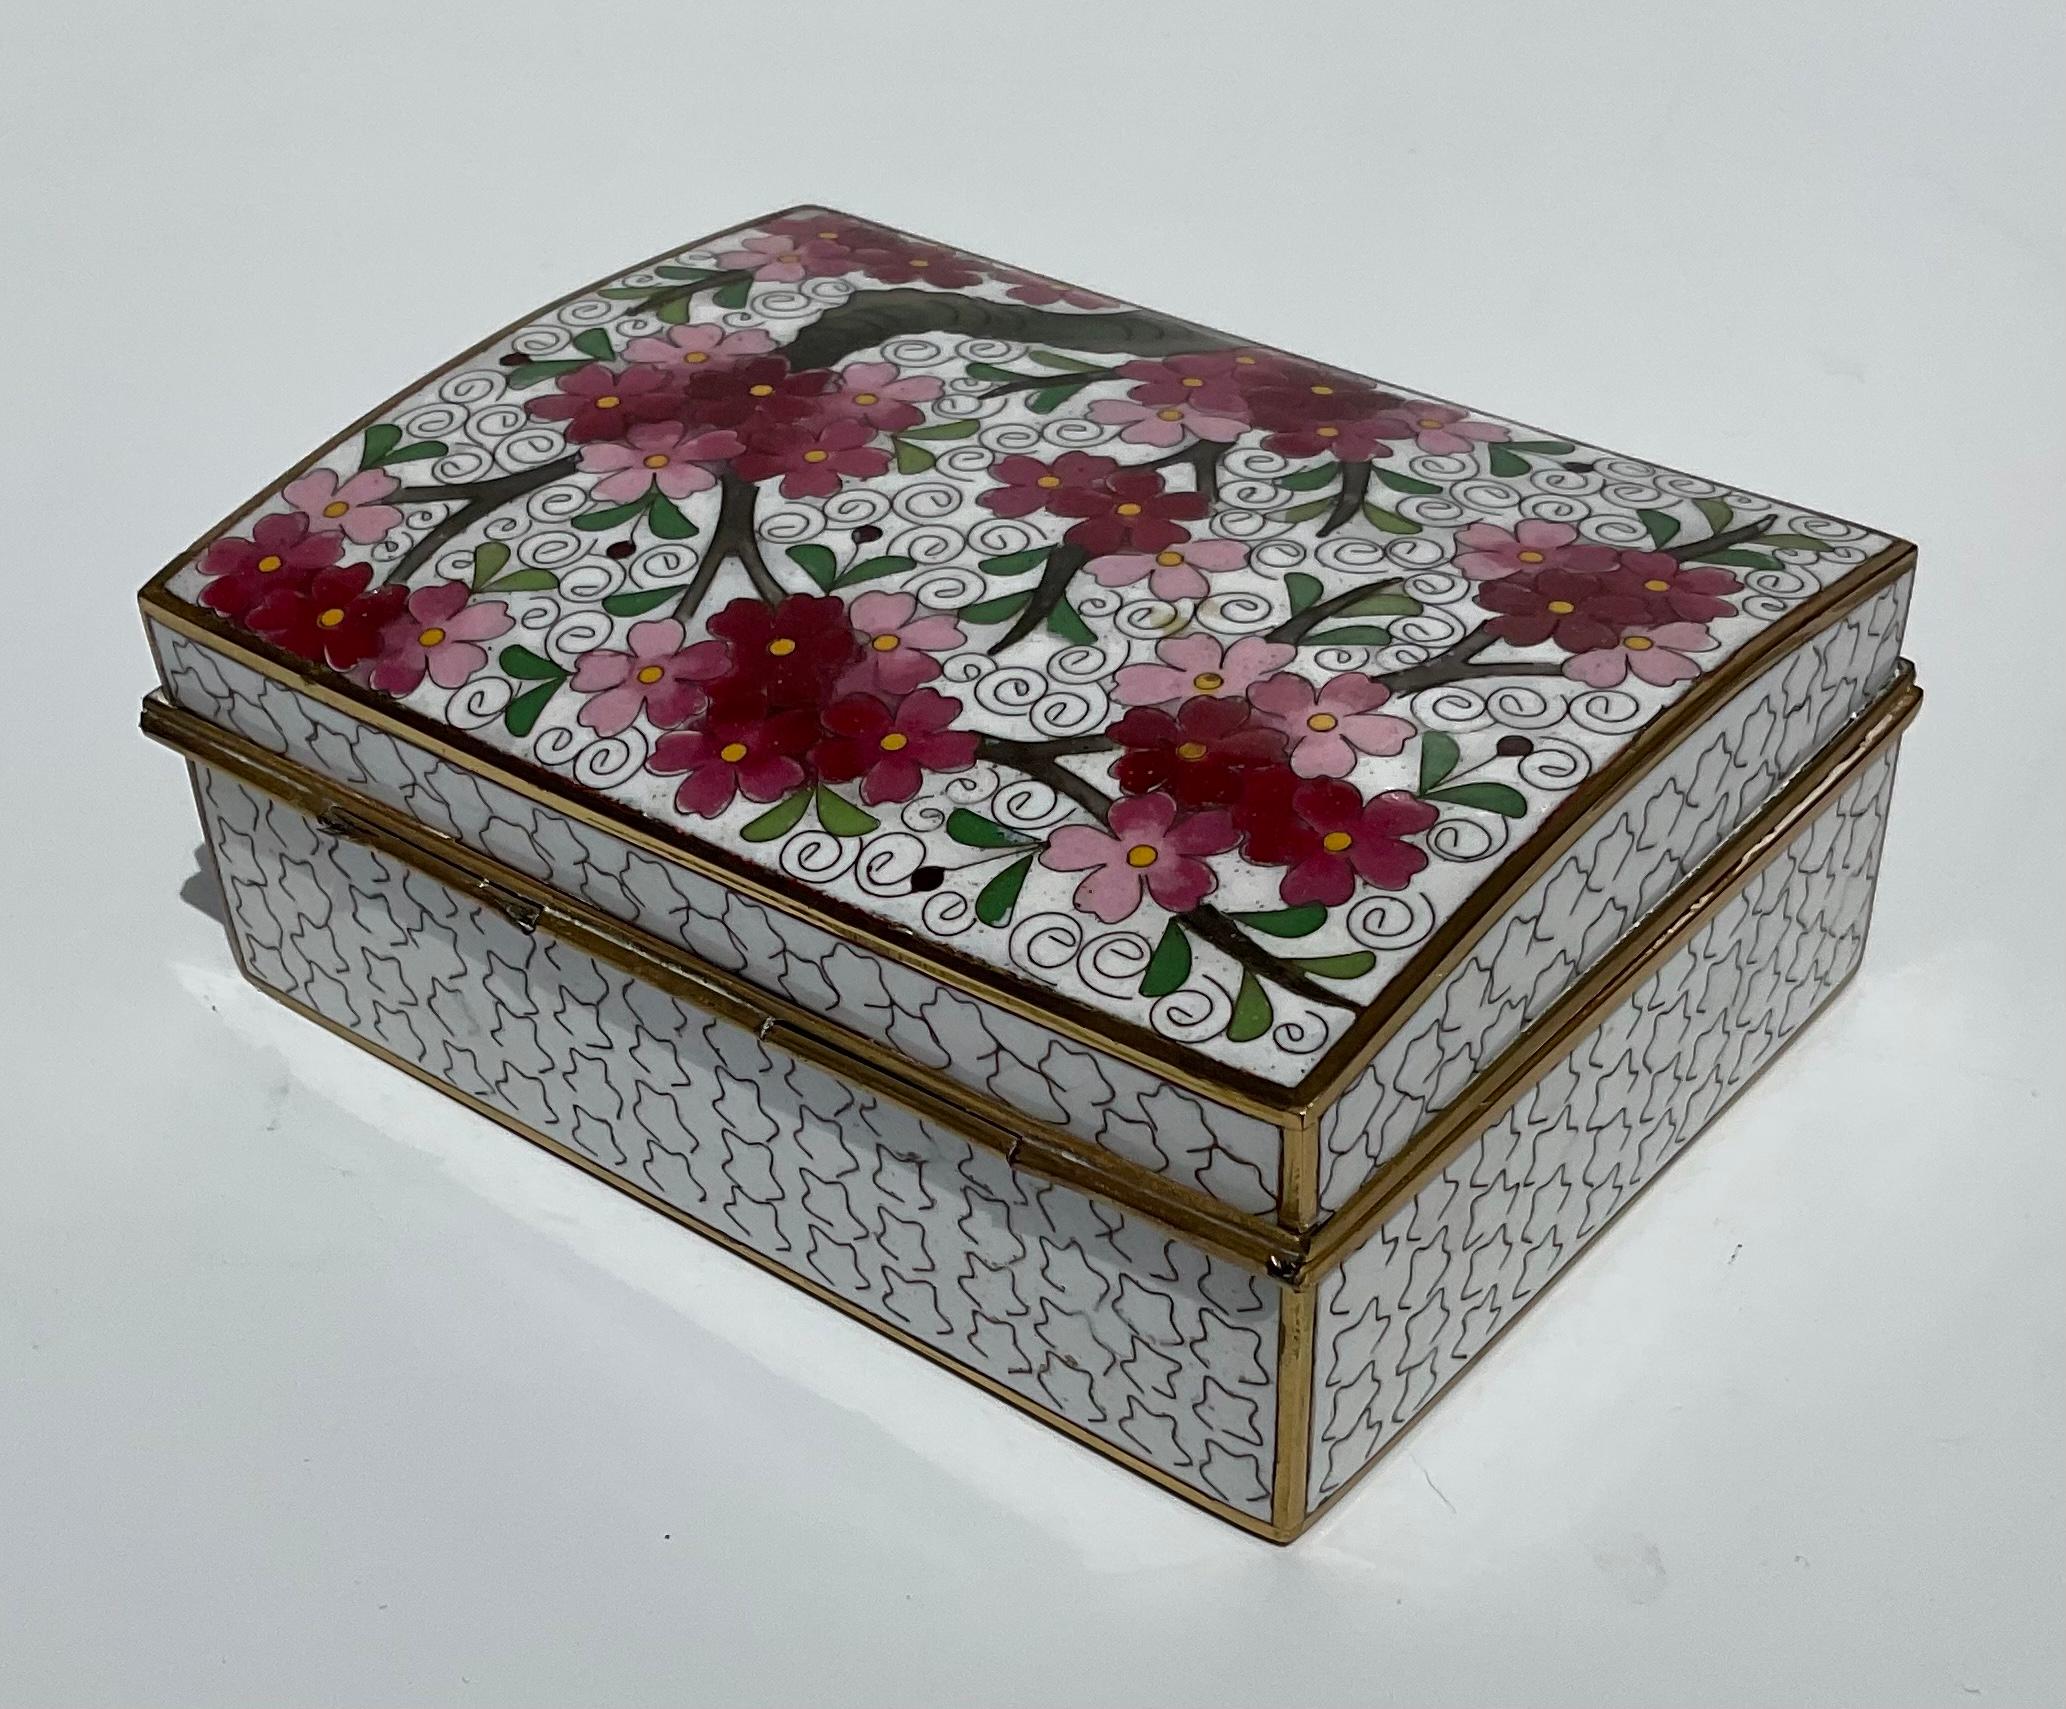 Enamel Ando Signed Japanese Flowering Tree Box Cloisonne with Amazing Design For Sale